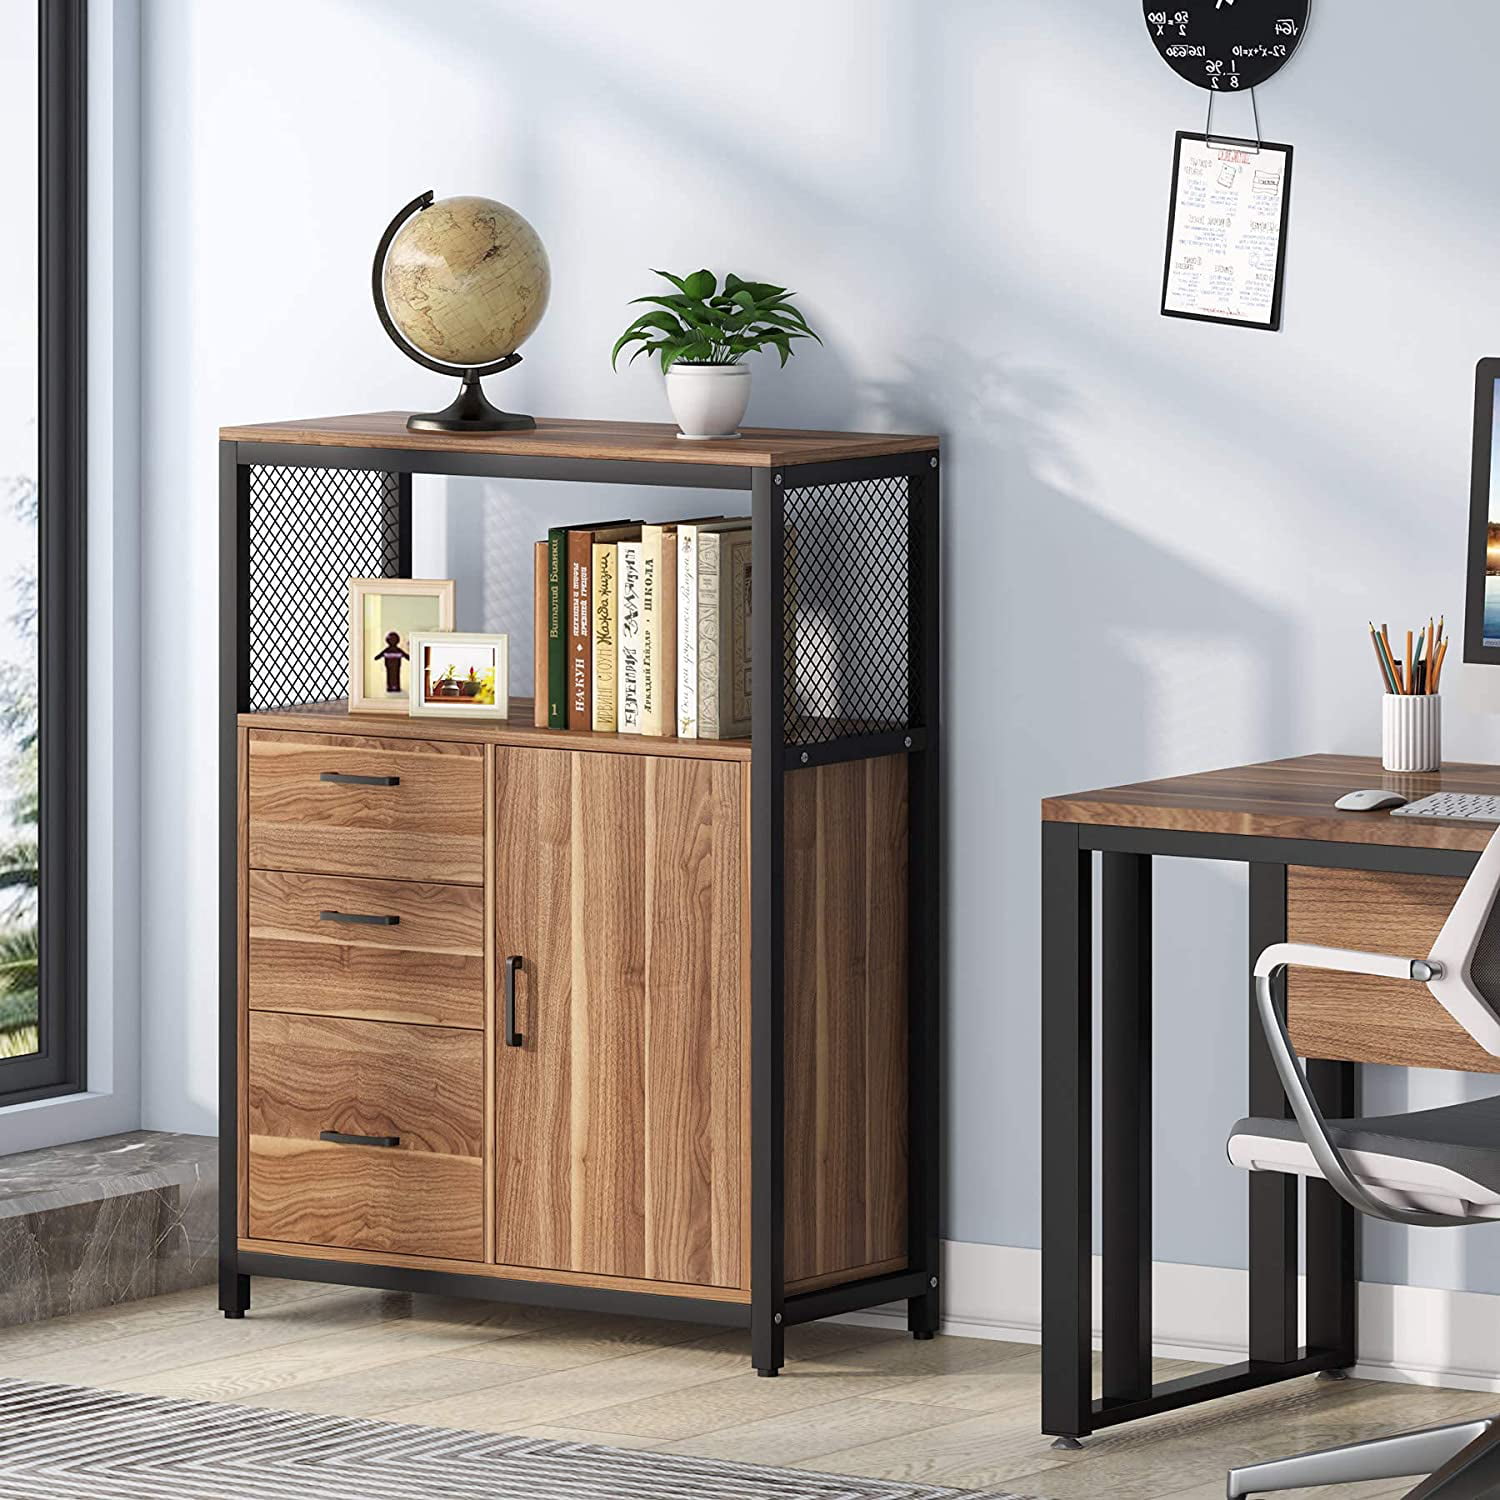 Details about   Modern 3-Drawer File Cabinet Wooden Home Office Supplies Storage Organizer Black 